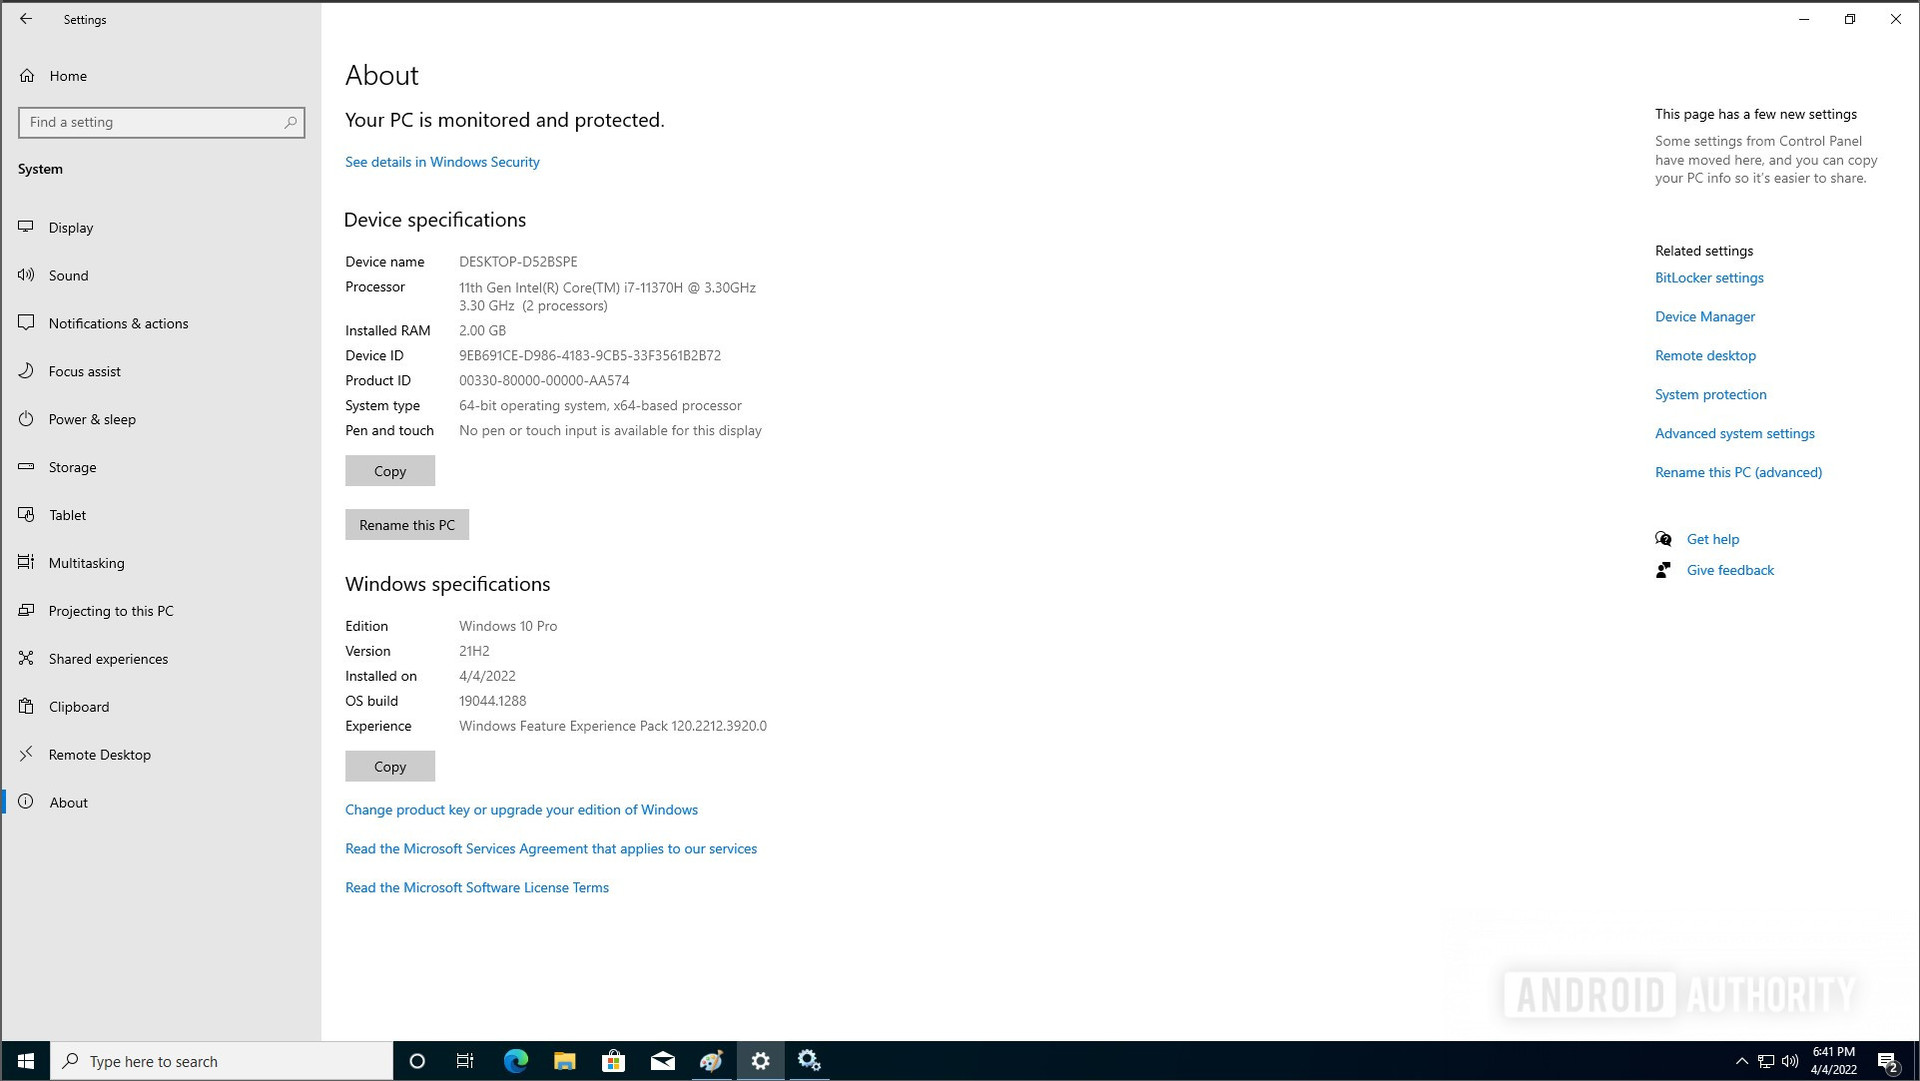 Windows 10 version check